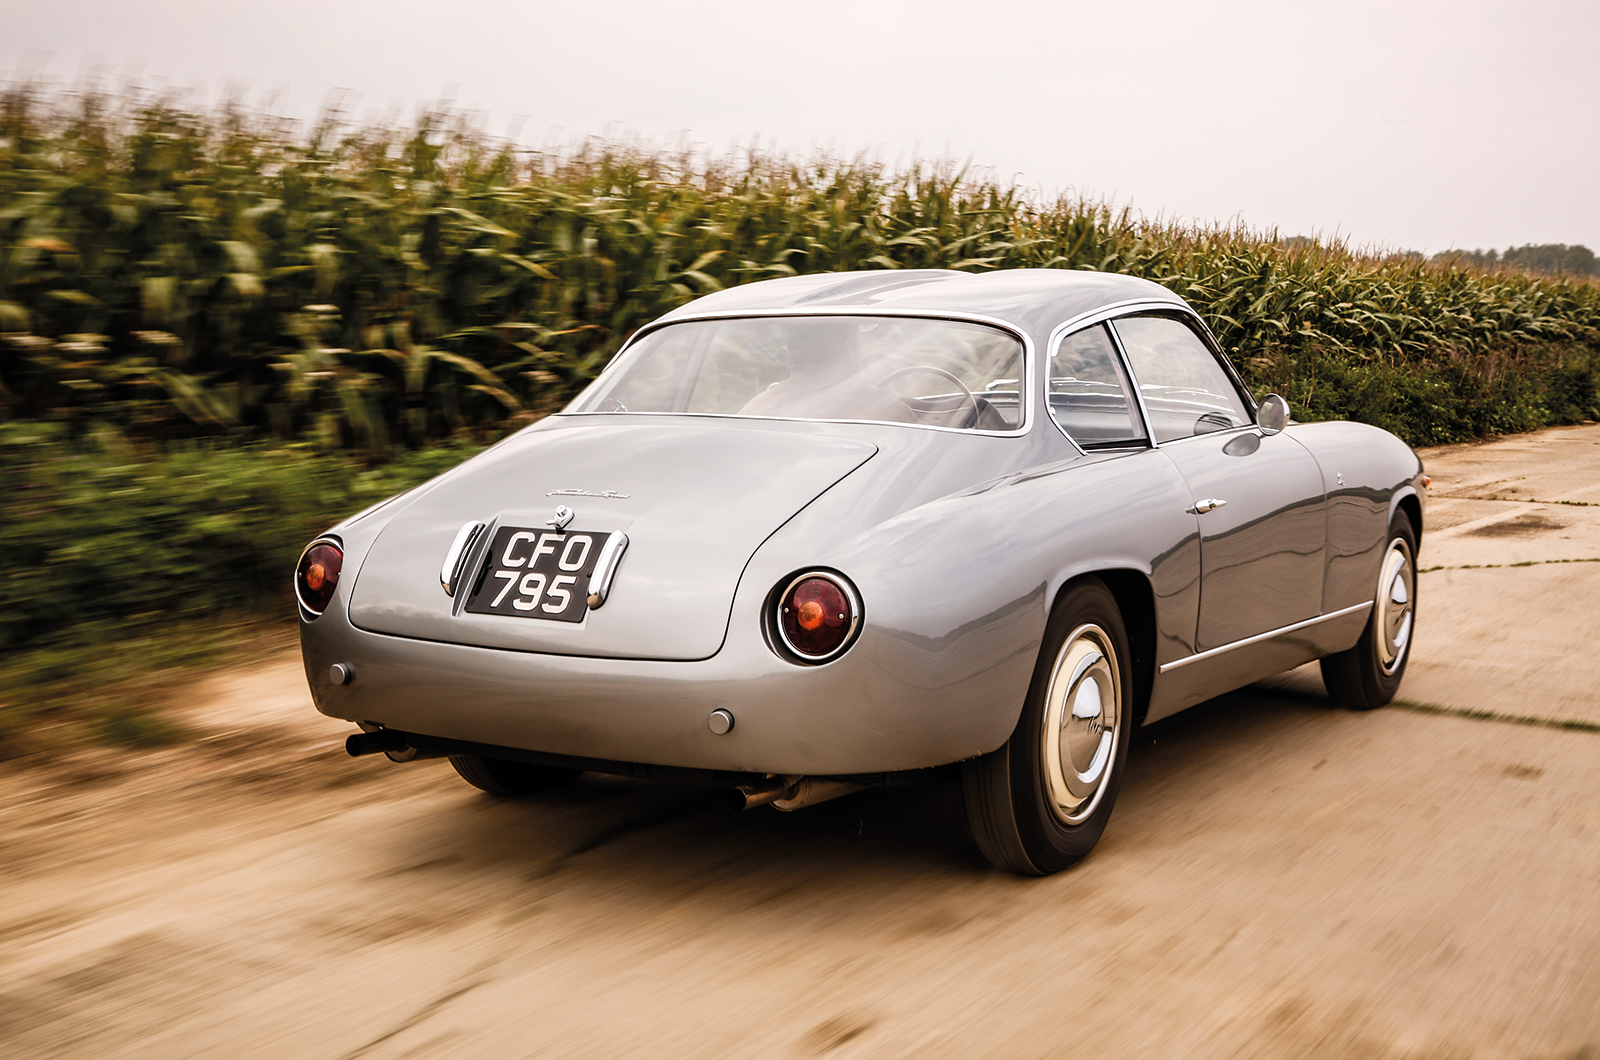 Classic & Sports Car – Lancia Flaminia family: the last of the proper Lancias